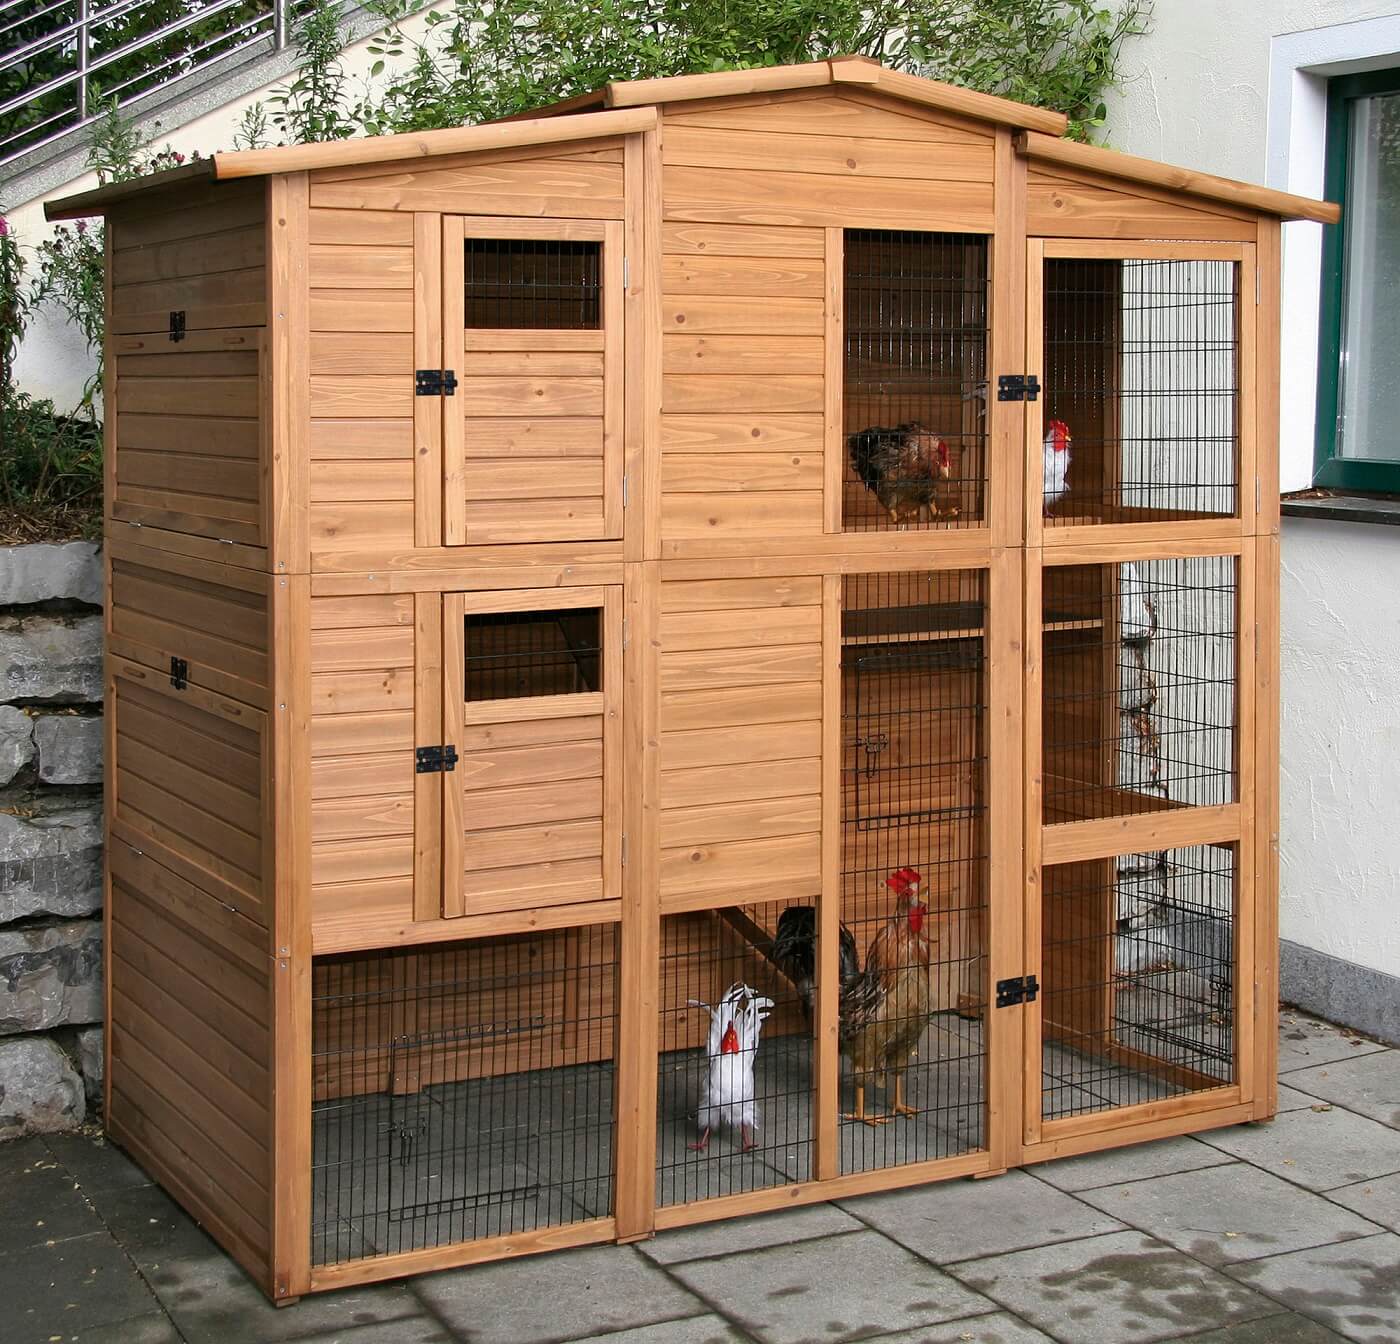 KERBL Hühnerhaus - ideal für Hobbyfarming